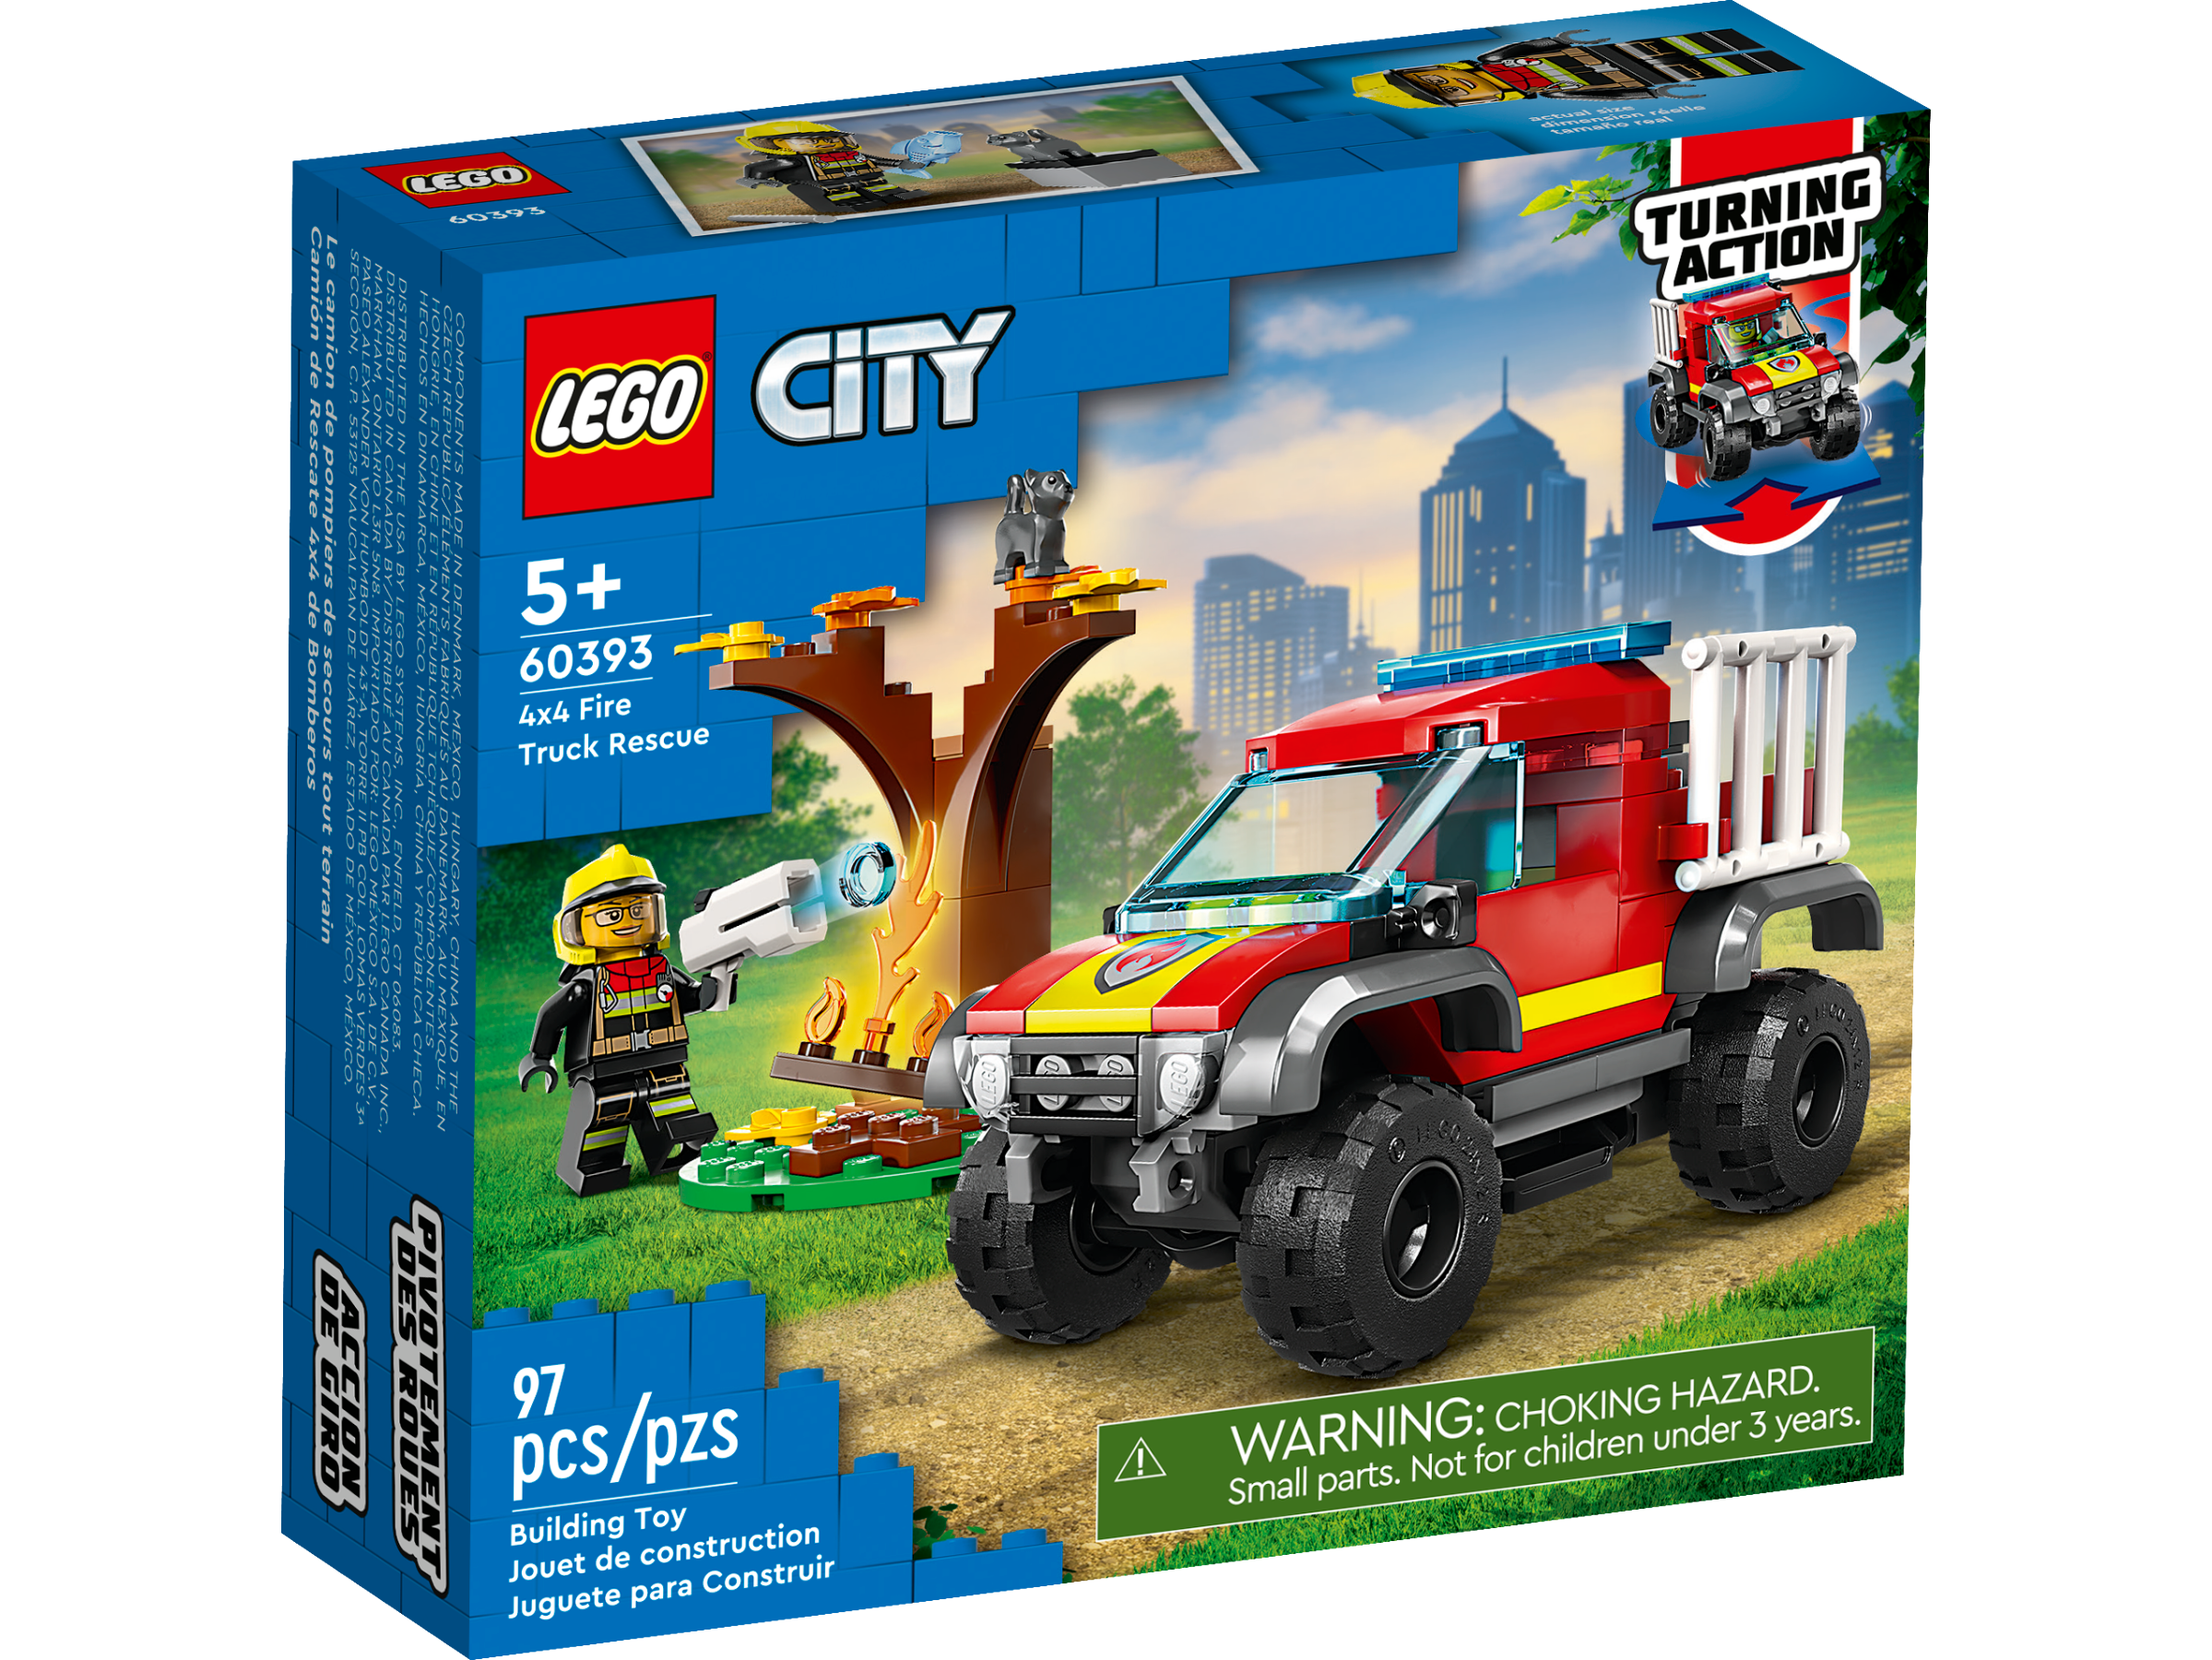 4x4 Fire Truck Rescue 60393, City